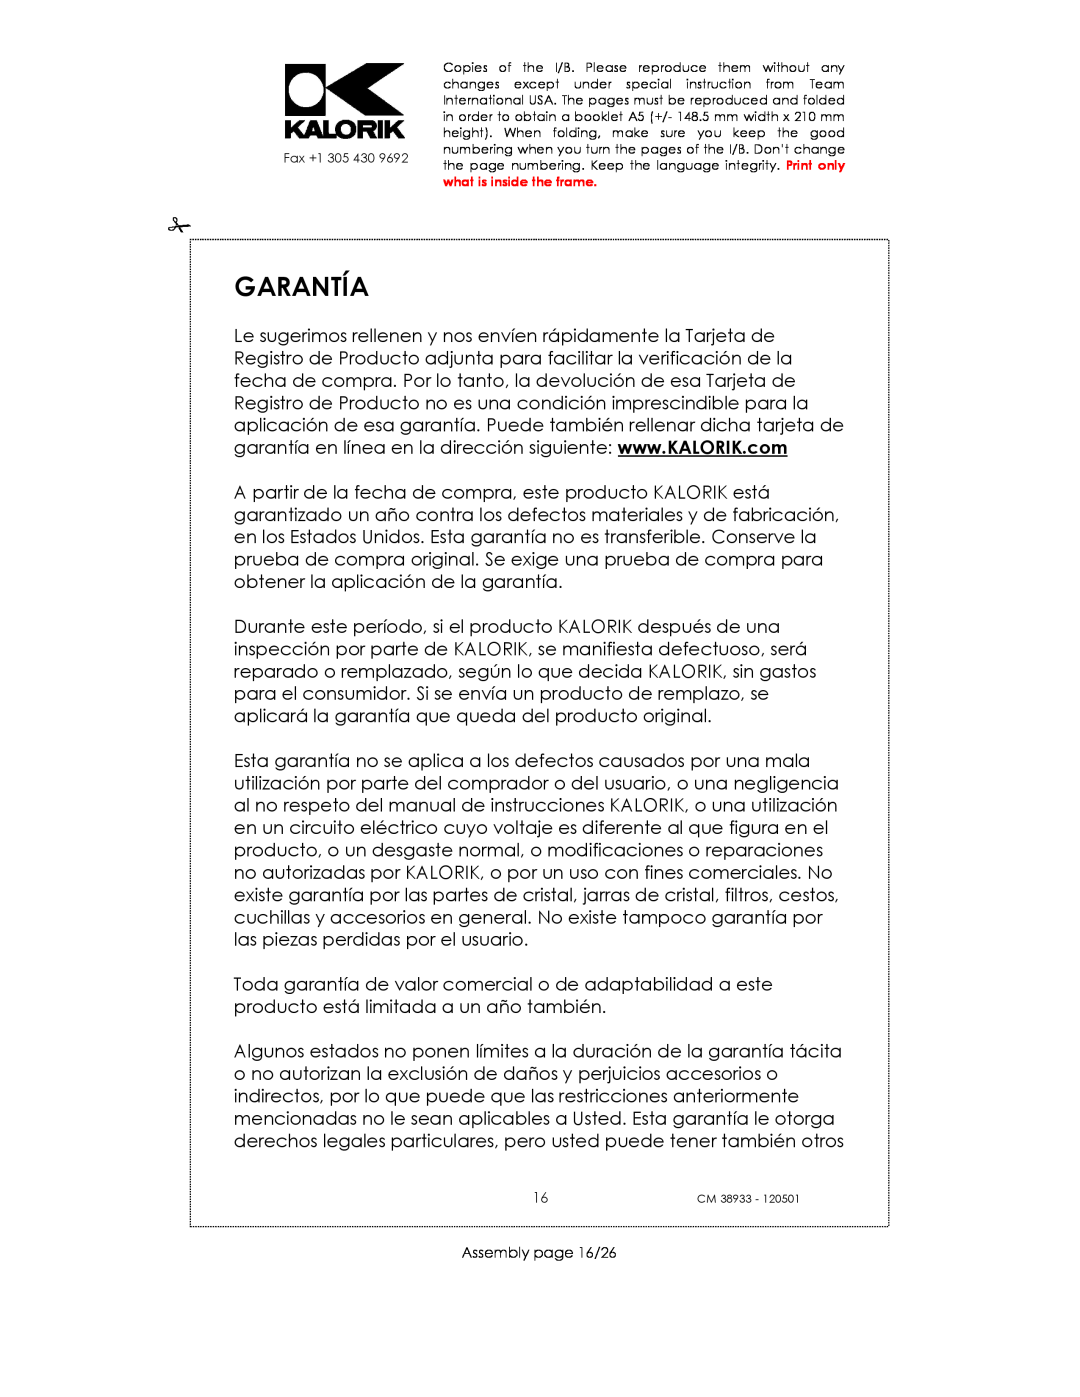 Kalorik CM 38933 manual Garantía, Assembly page 16/26 